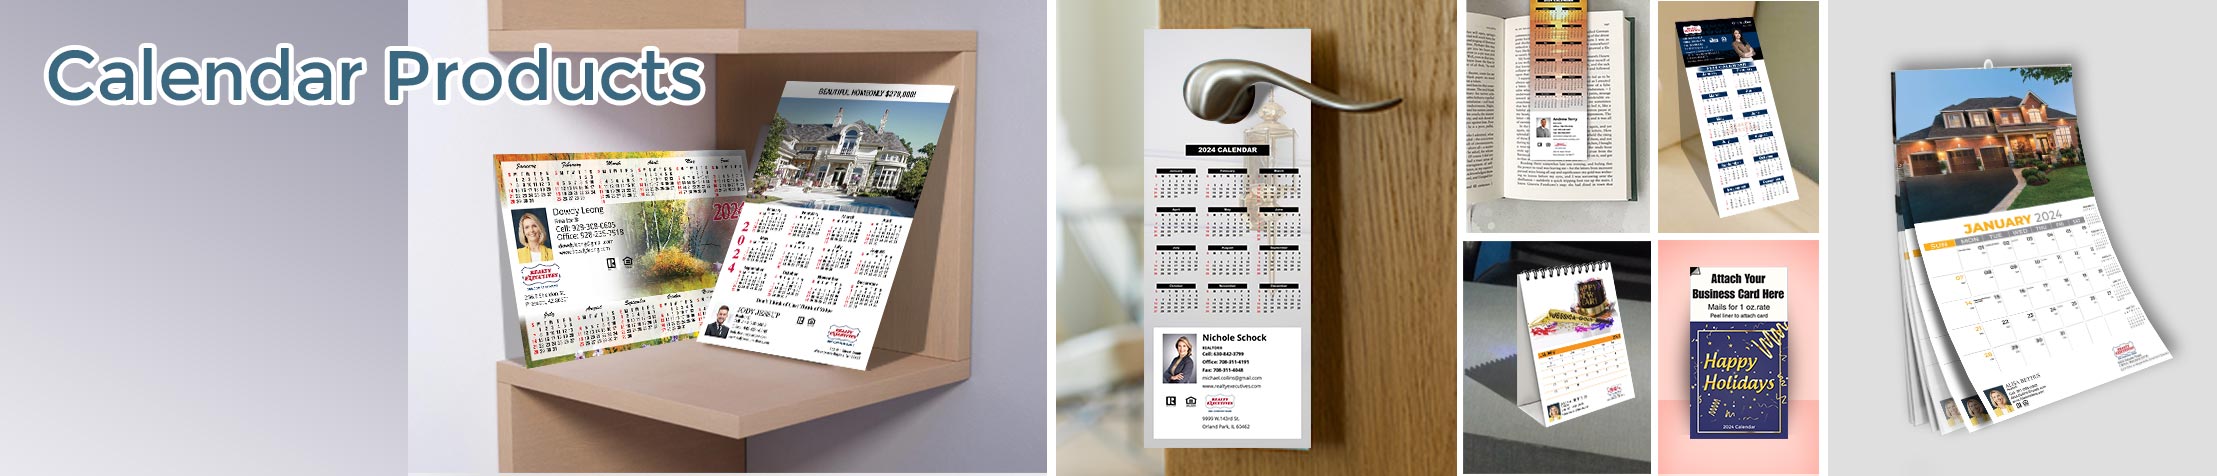 Realty Executives Real Estate Calendar Products - Realty Executives  2019 calendars, magnets, door hangers, bookmarks, tear away note pads | BestPrintBuy.com